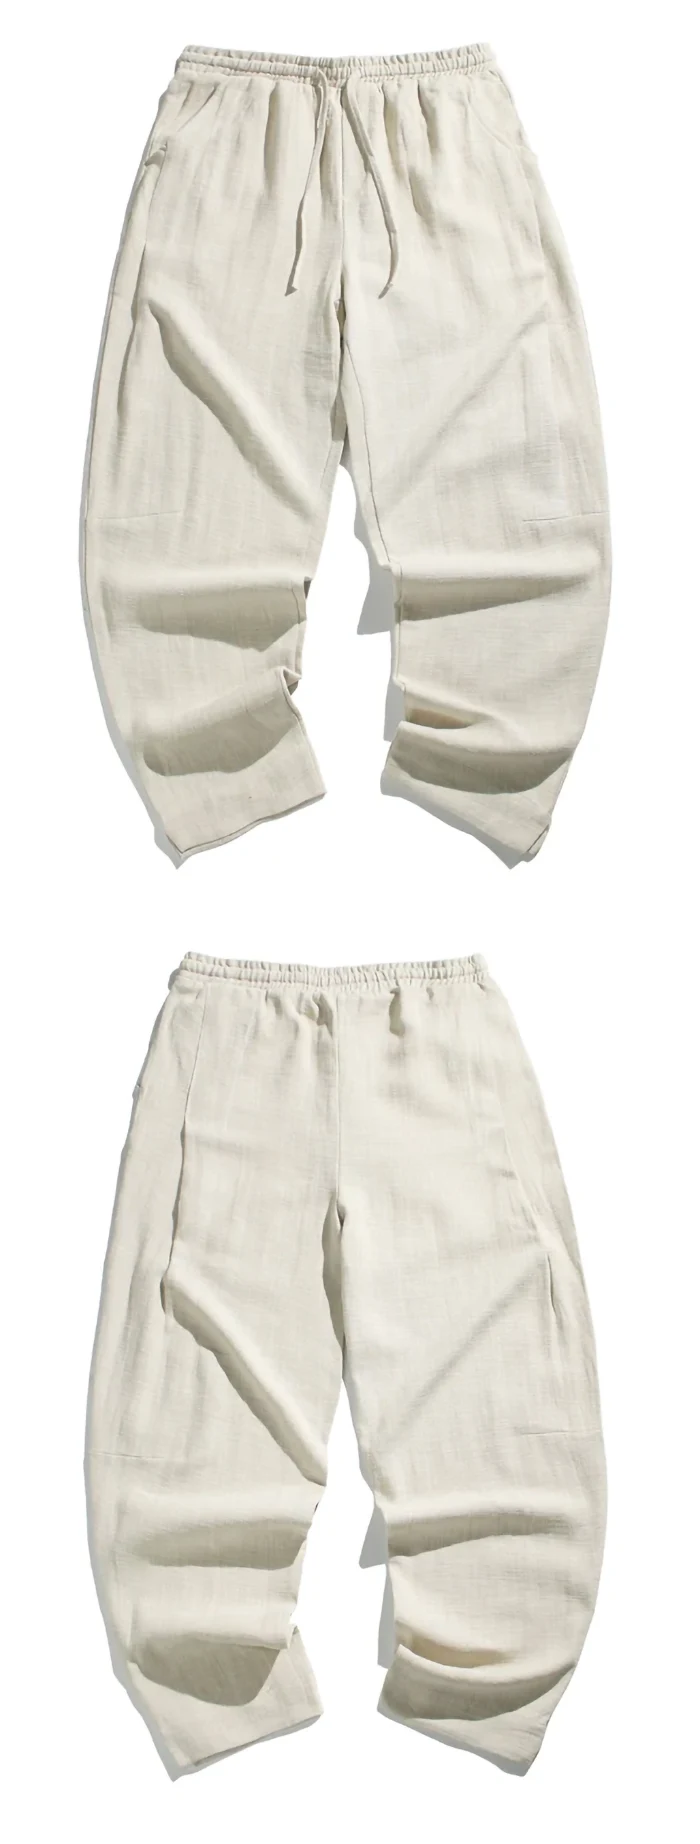 Linen harem pants "Kamatsu" front and back